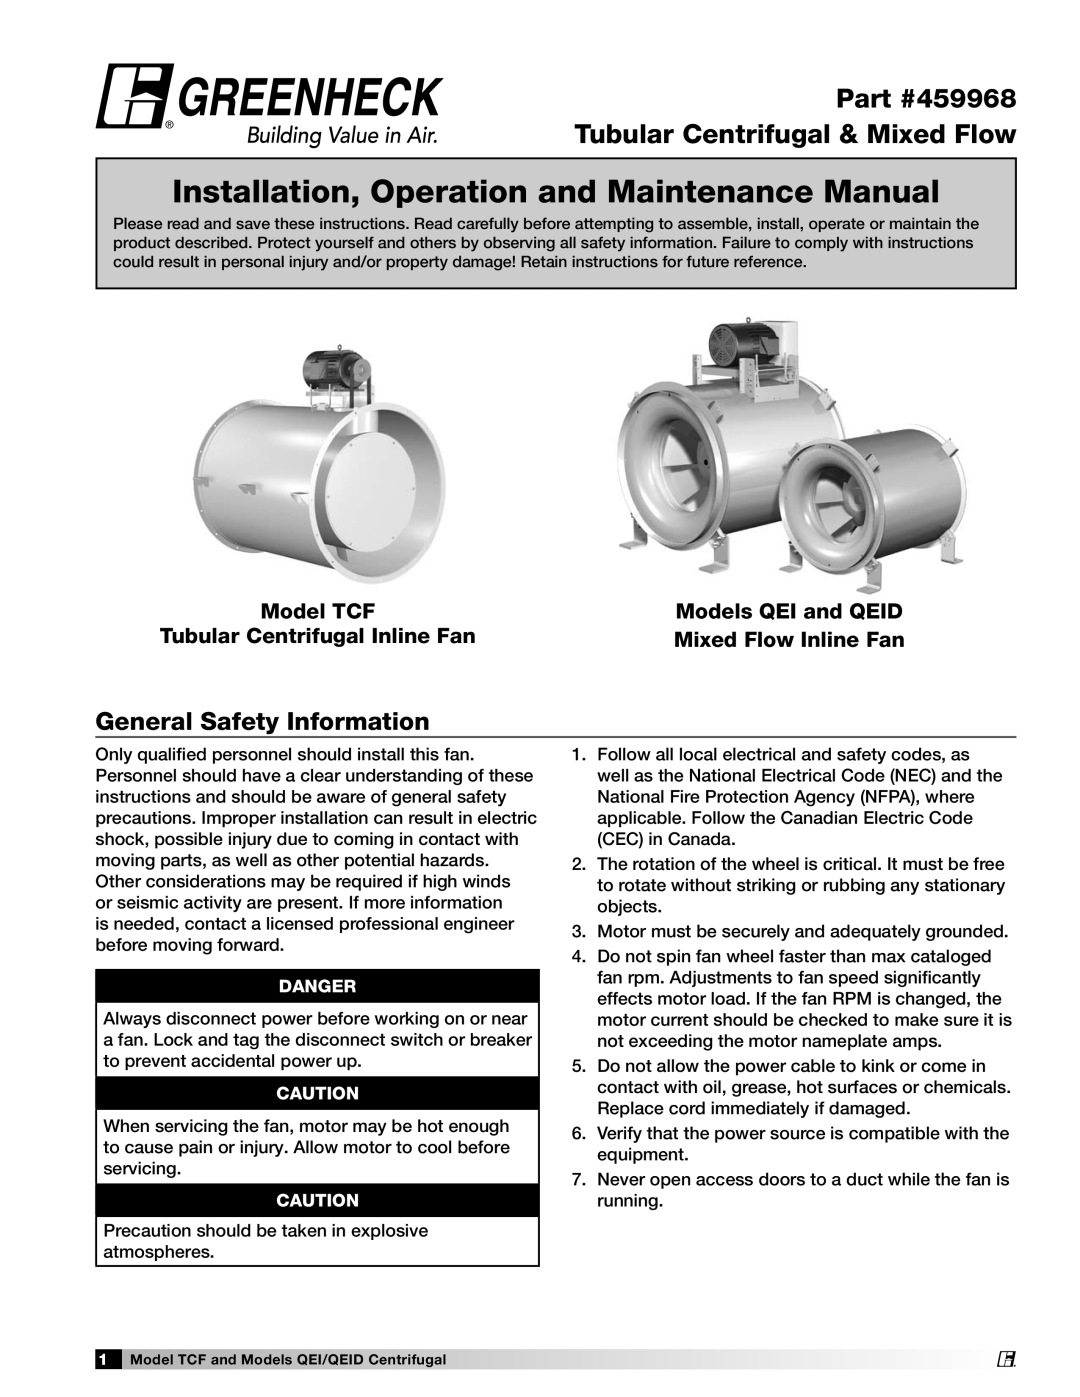 Greenheck Fan 459968 manual General Safety Information, Model TCF, Models QEI and QEID, Tubular Centrifugal Inline Fan 